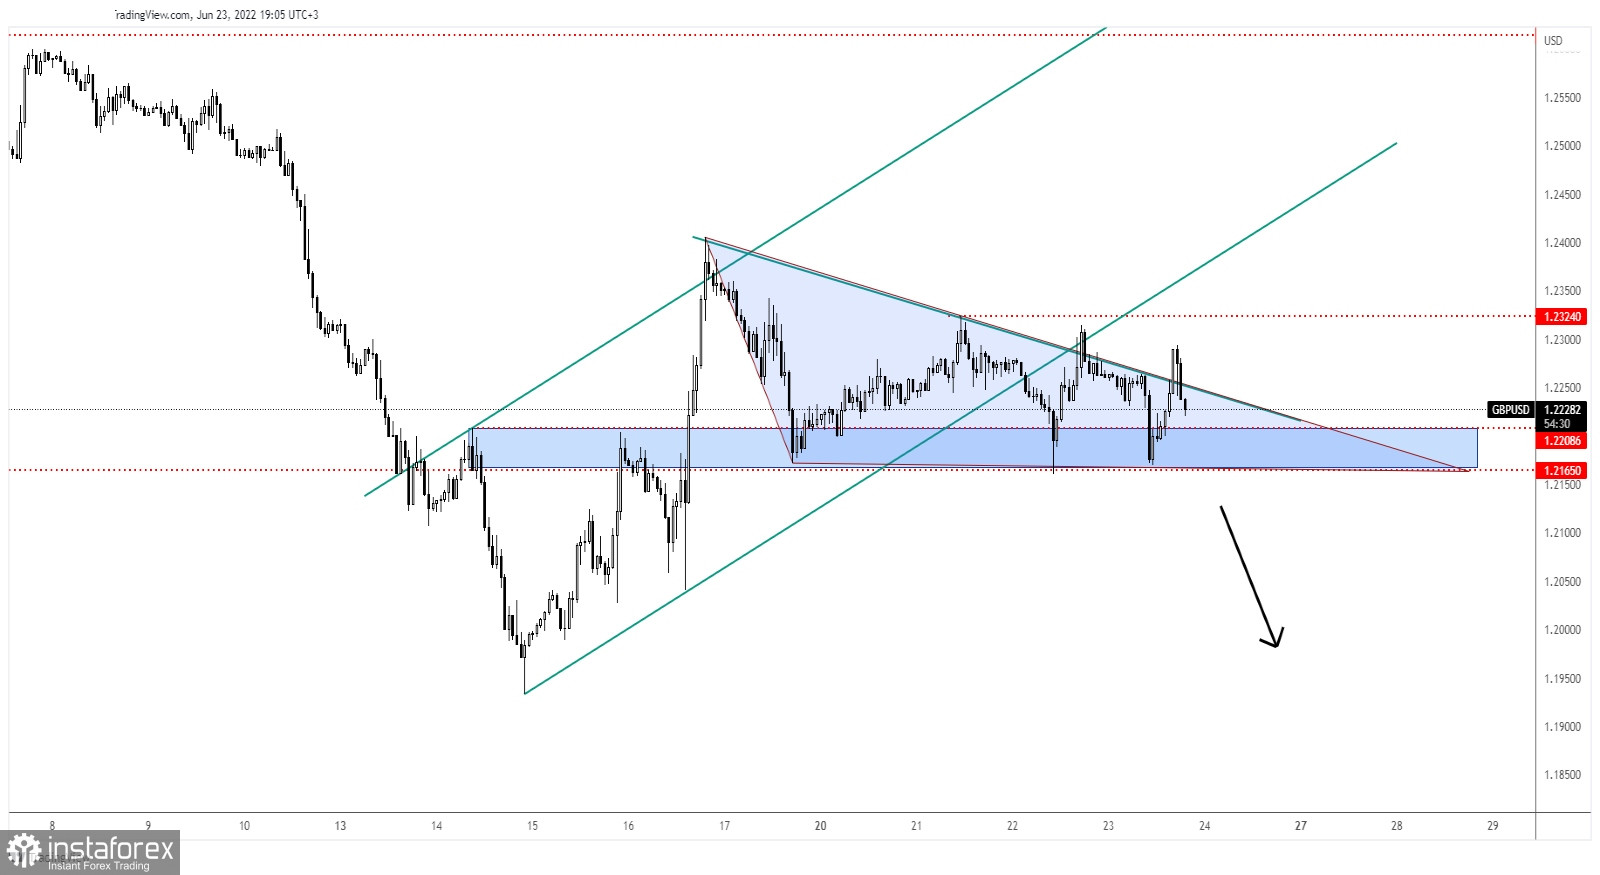 GBP/USD building triangle as bearish pattern 